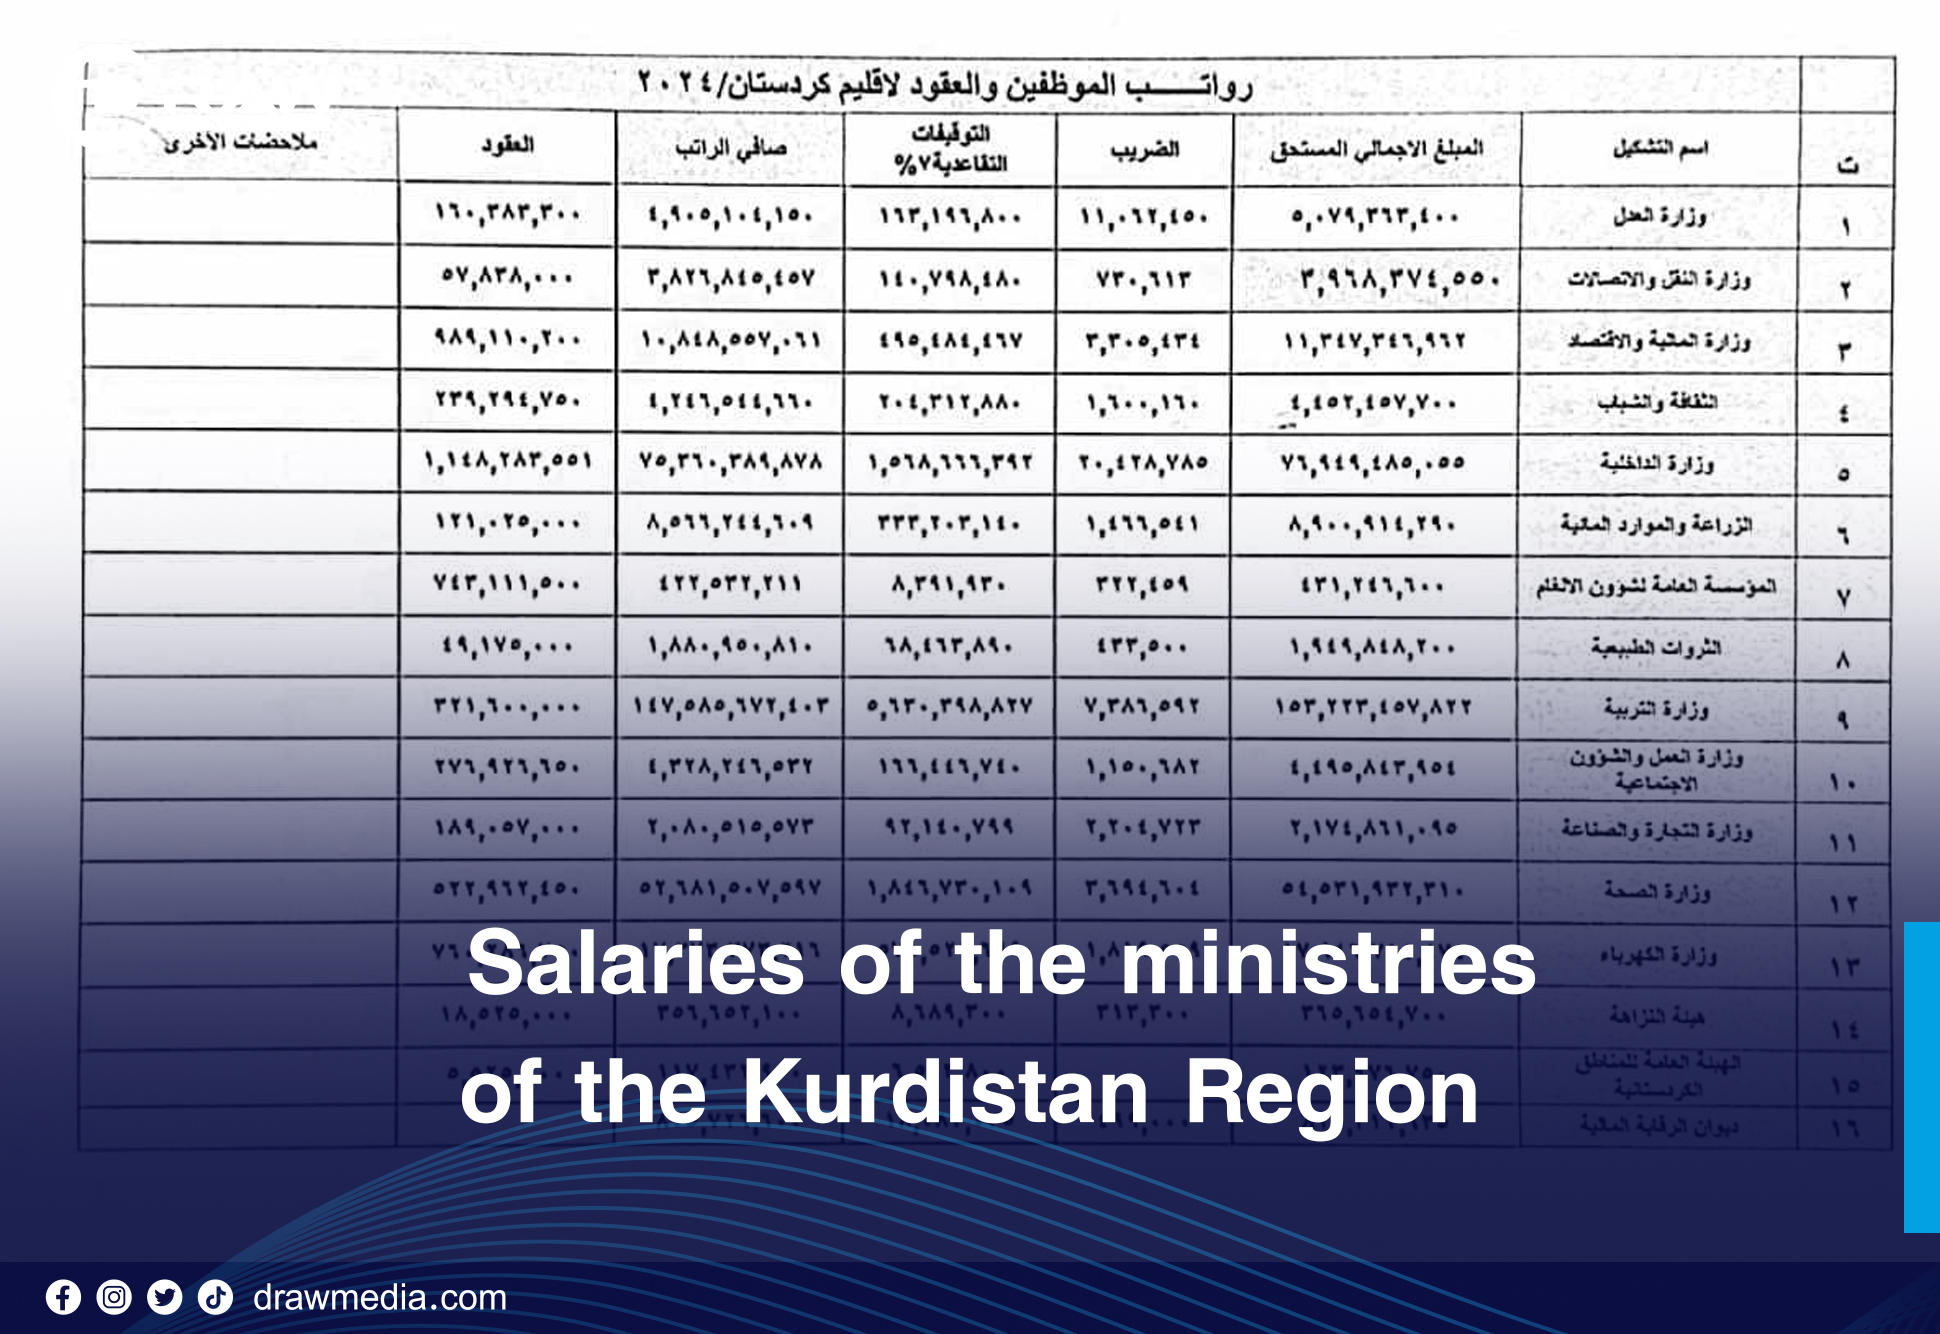 DrawMedia.net / Salaries of the ministries and departments of the Kurdistan Region